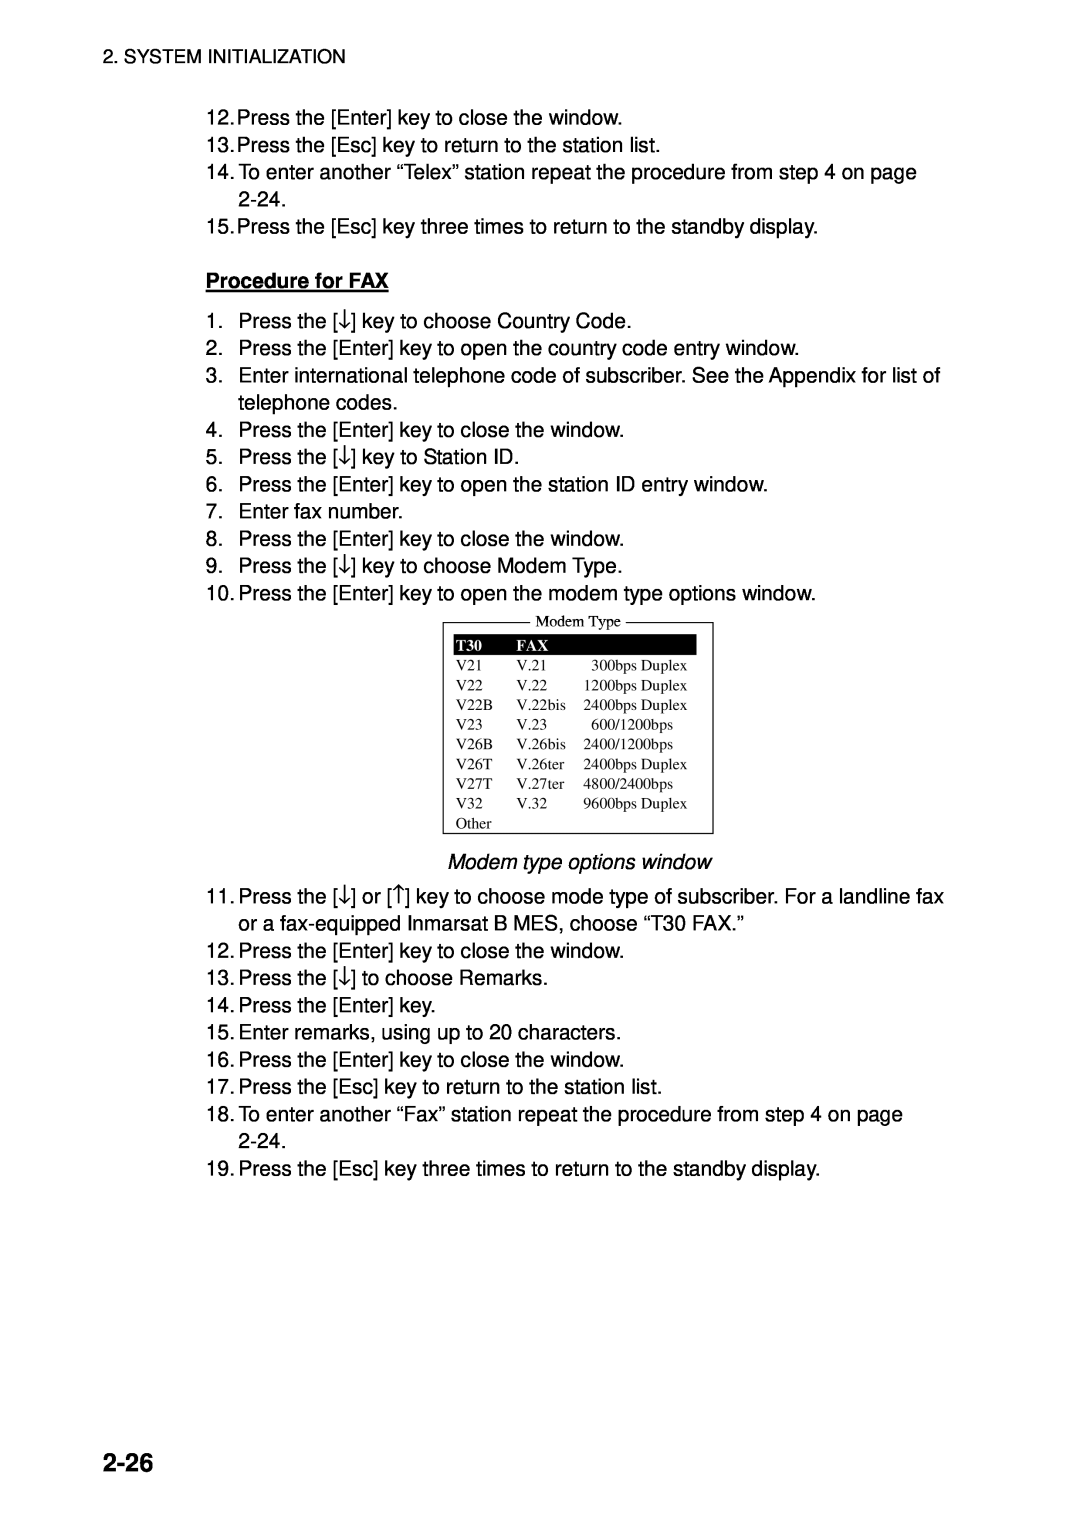 Furuno 16 manual 2-26, Procedure for FAX, Modem type options window 